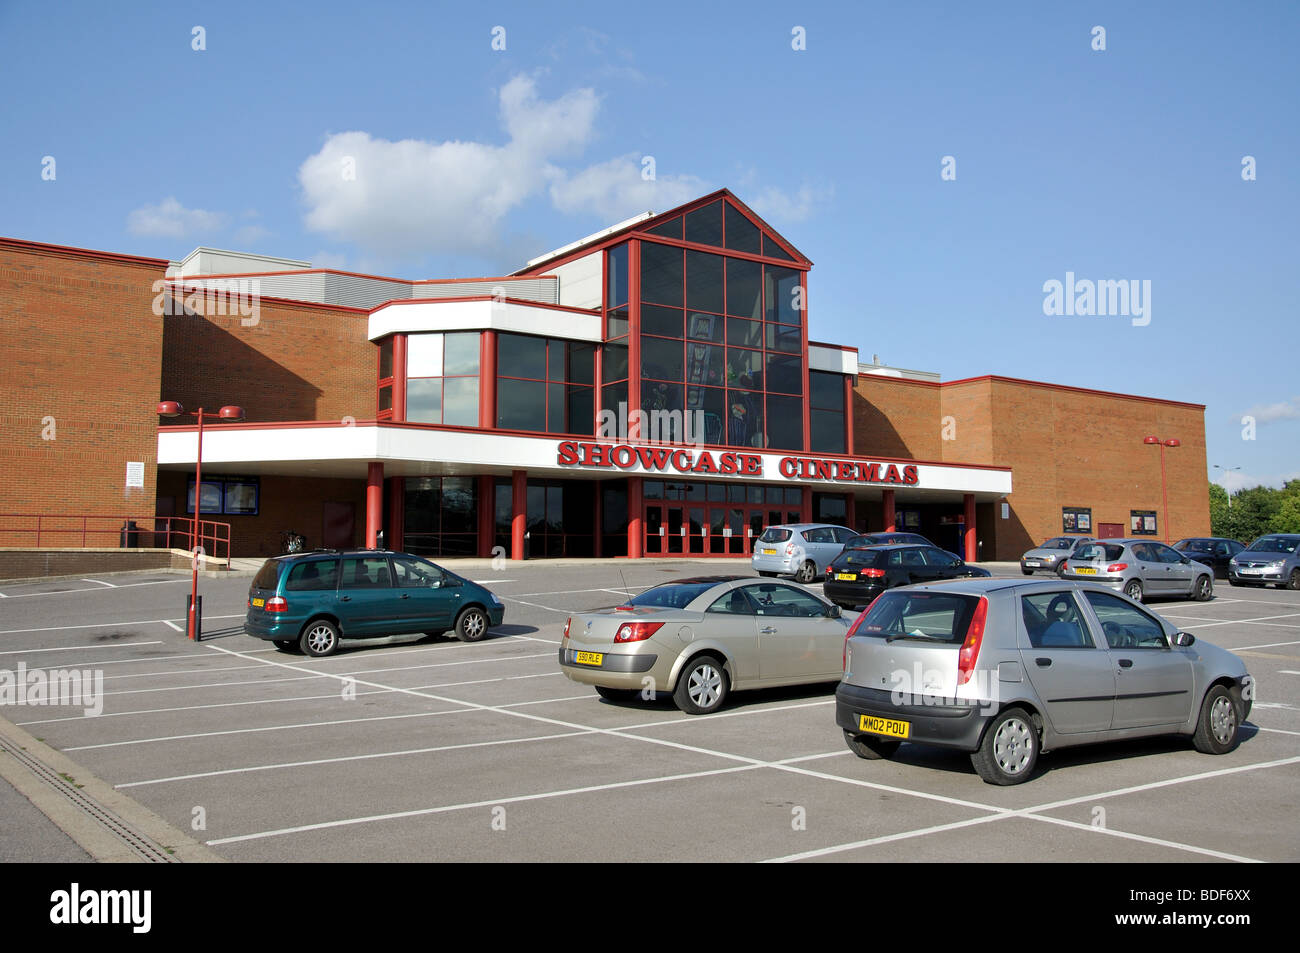 Showcase Cinema, Winnersh, Berkshire, England, United Kingdom Stock Photo